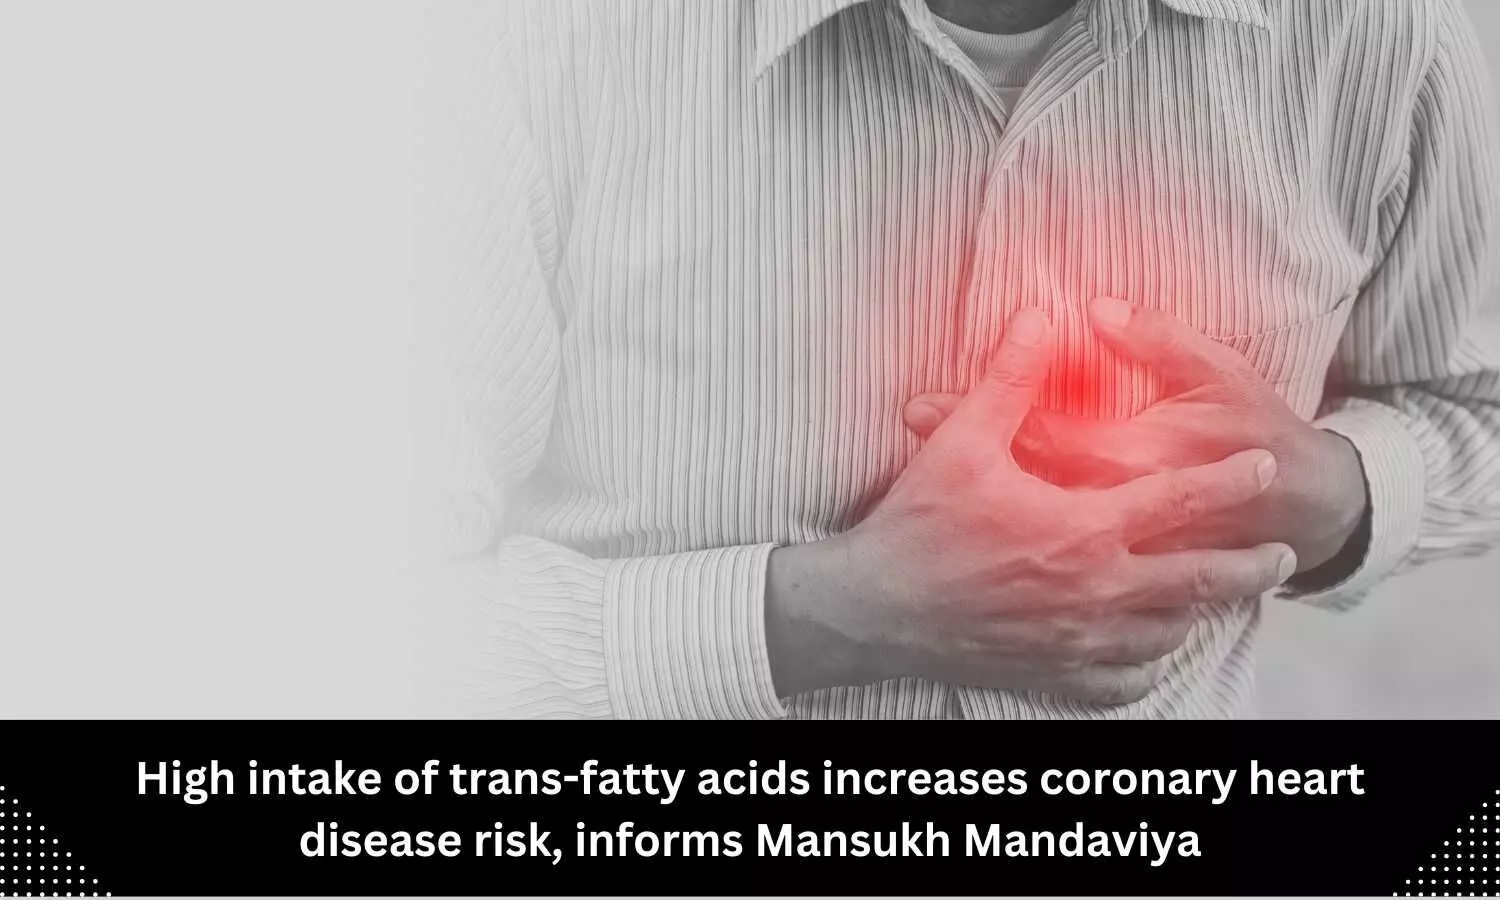 High intake of trans-fatty acids increases coronary heart disease risk, informs Mansukh Mandaviya